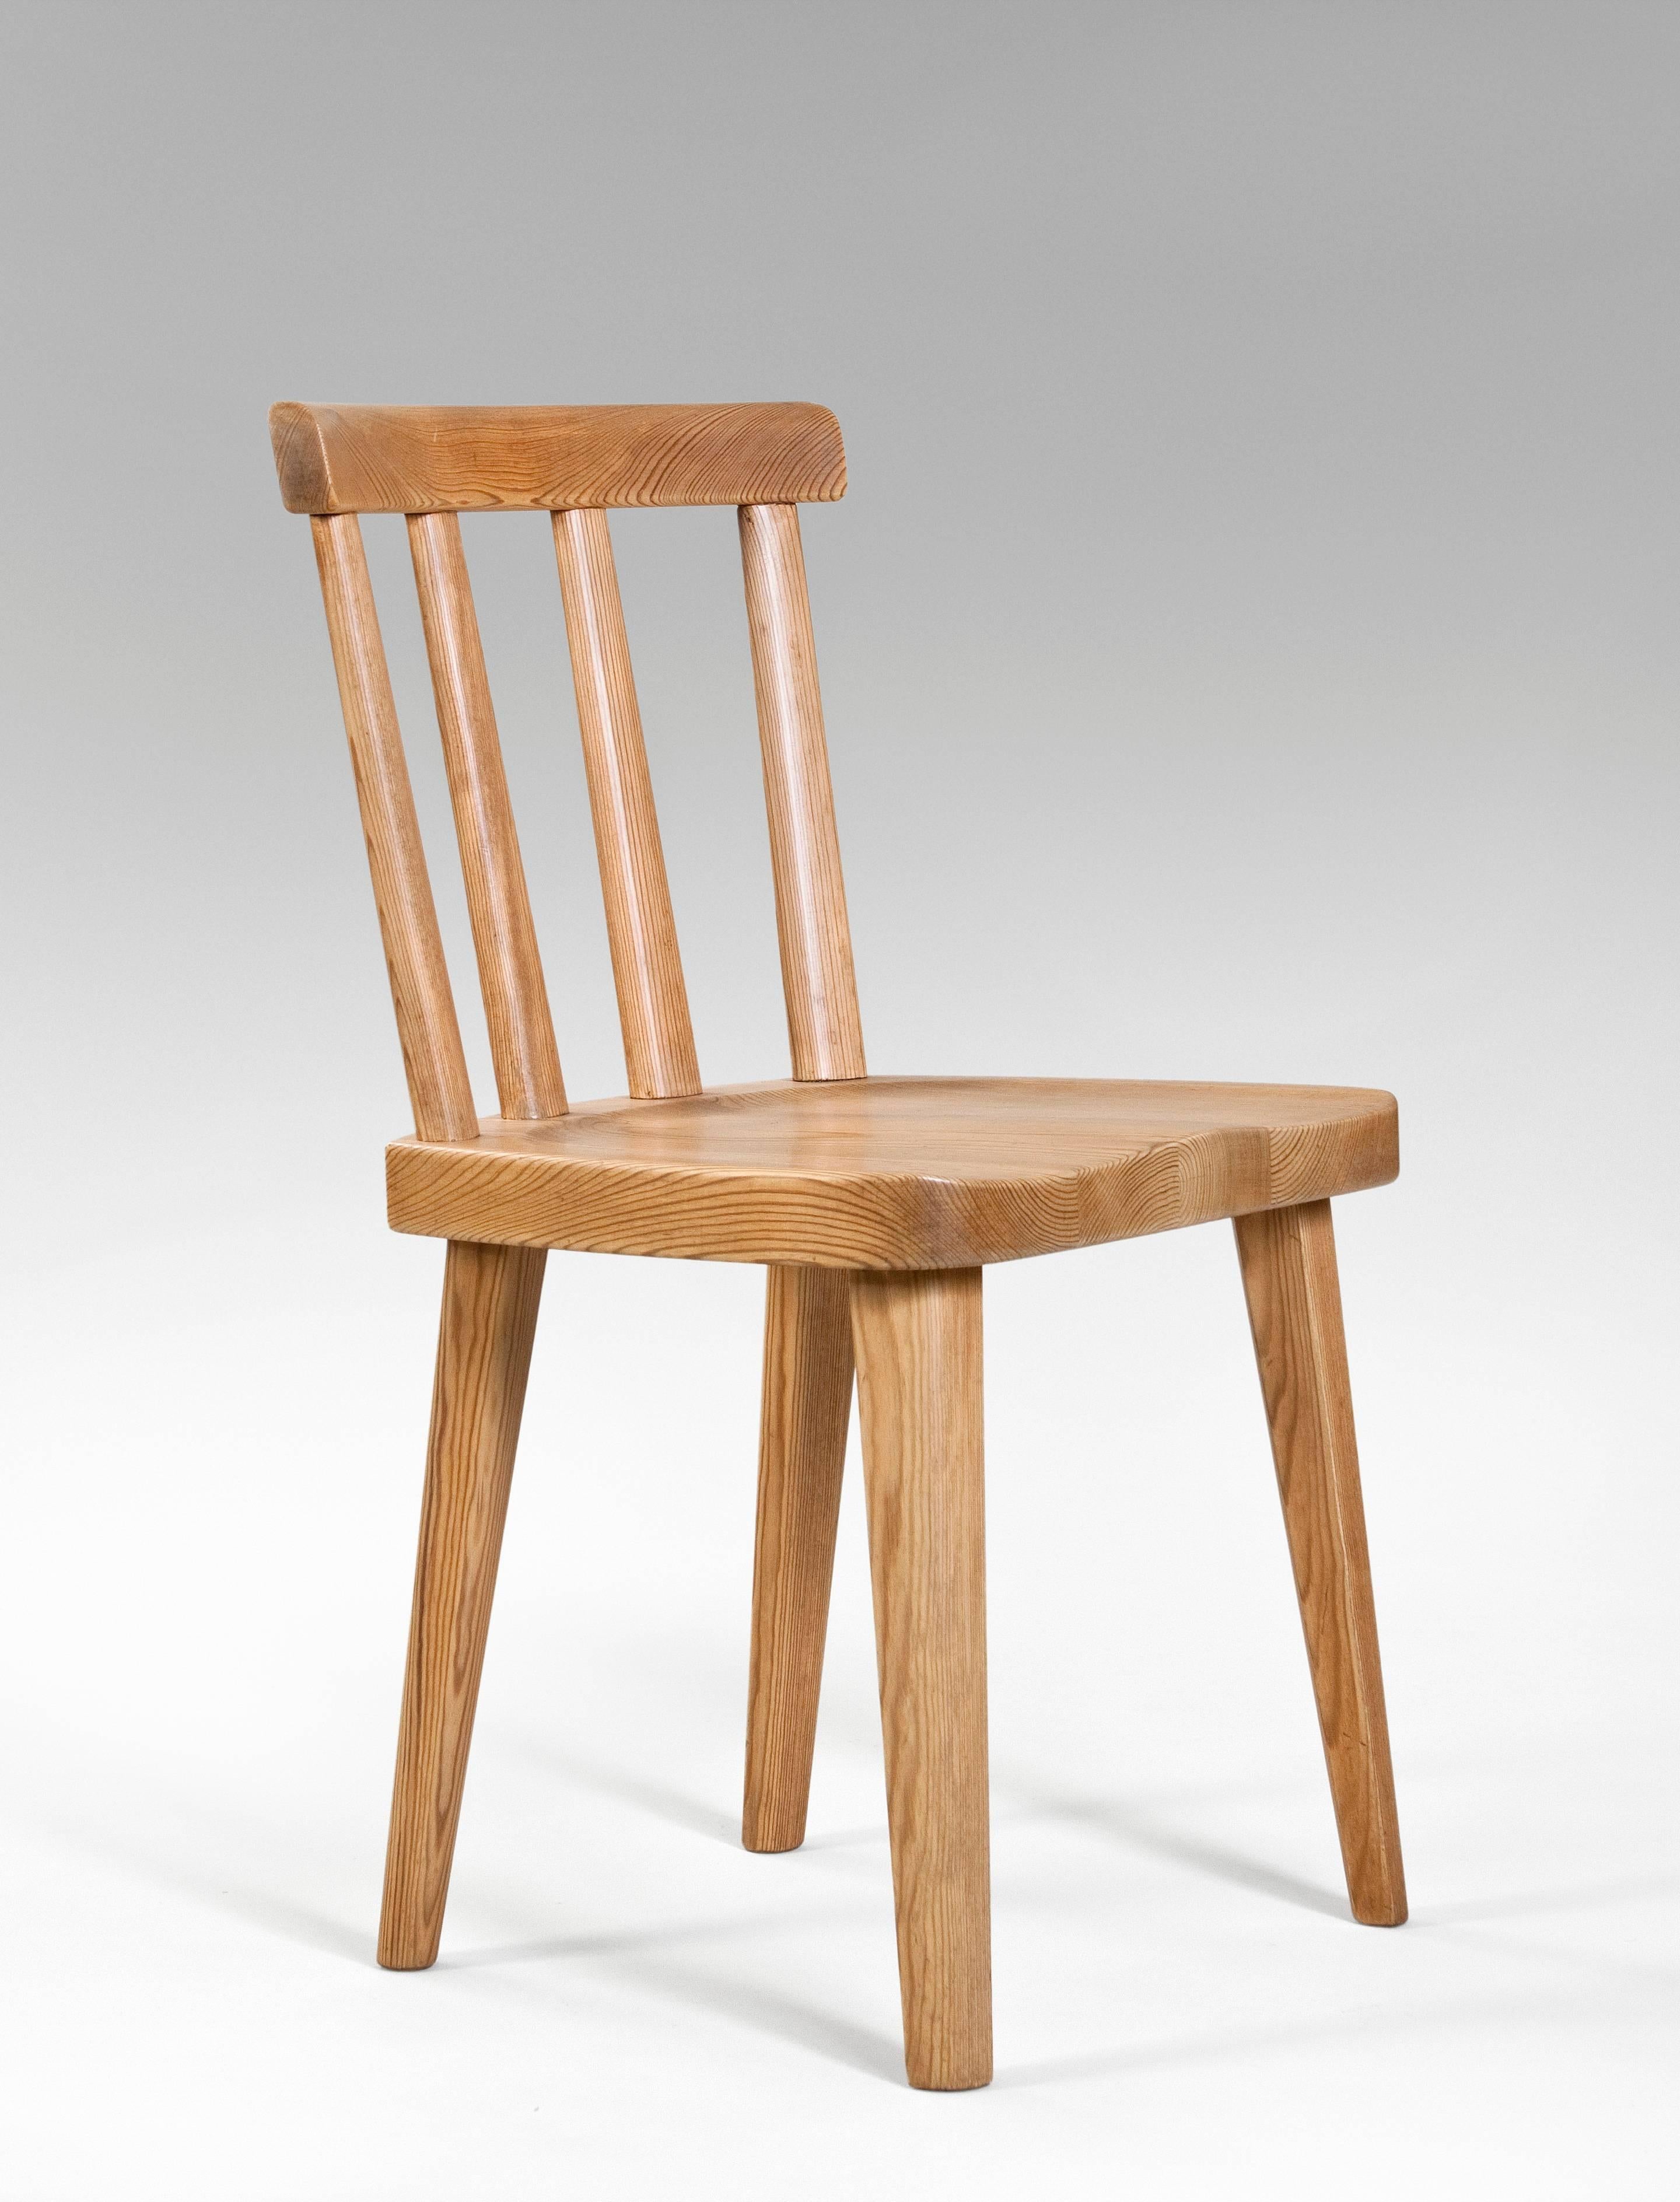 20th Century Axel Einar Hjorth for Nordiska Kompaniet, Set of 16 Swedish Pine Utö Chairs